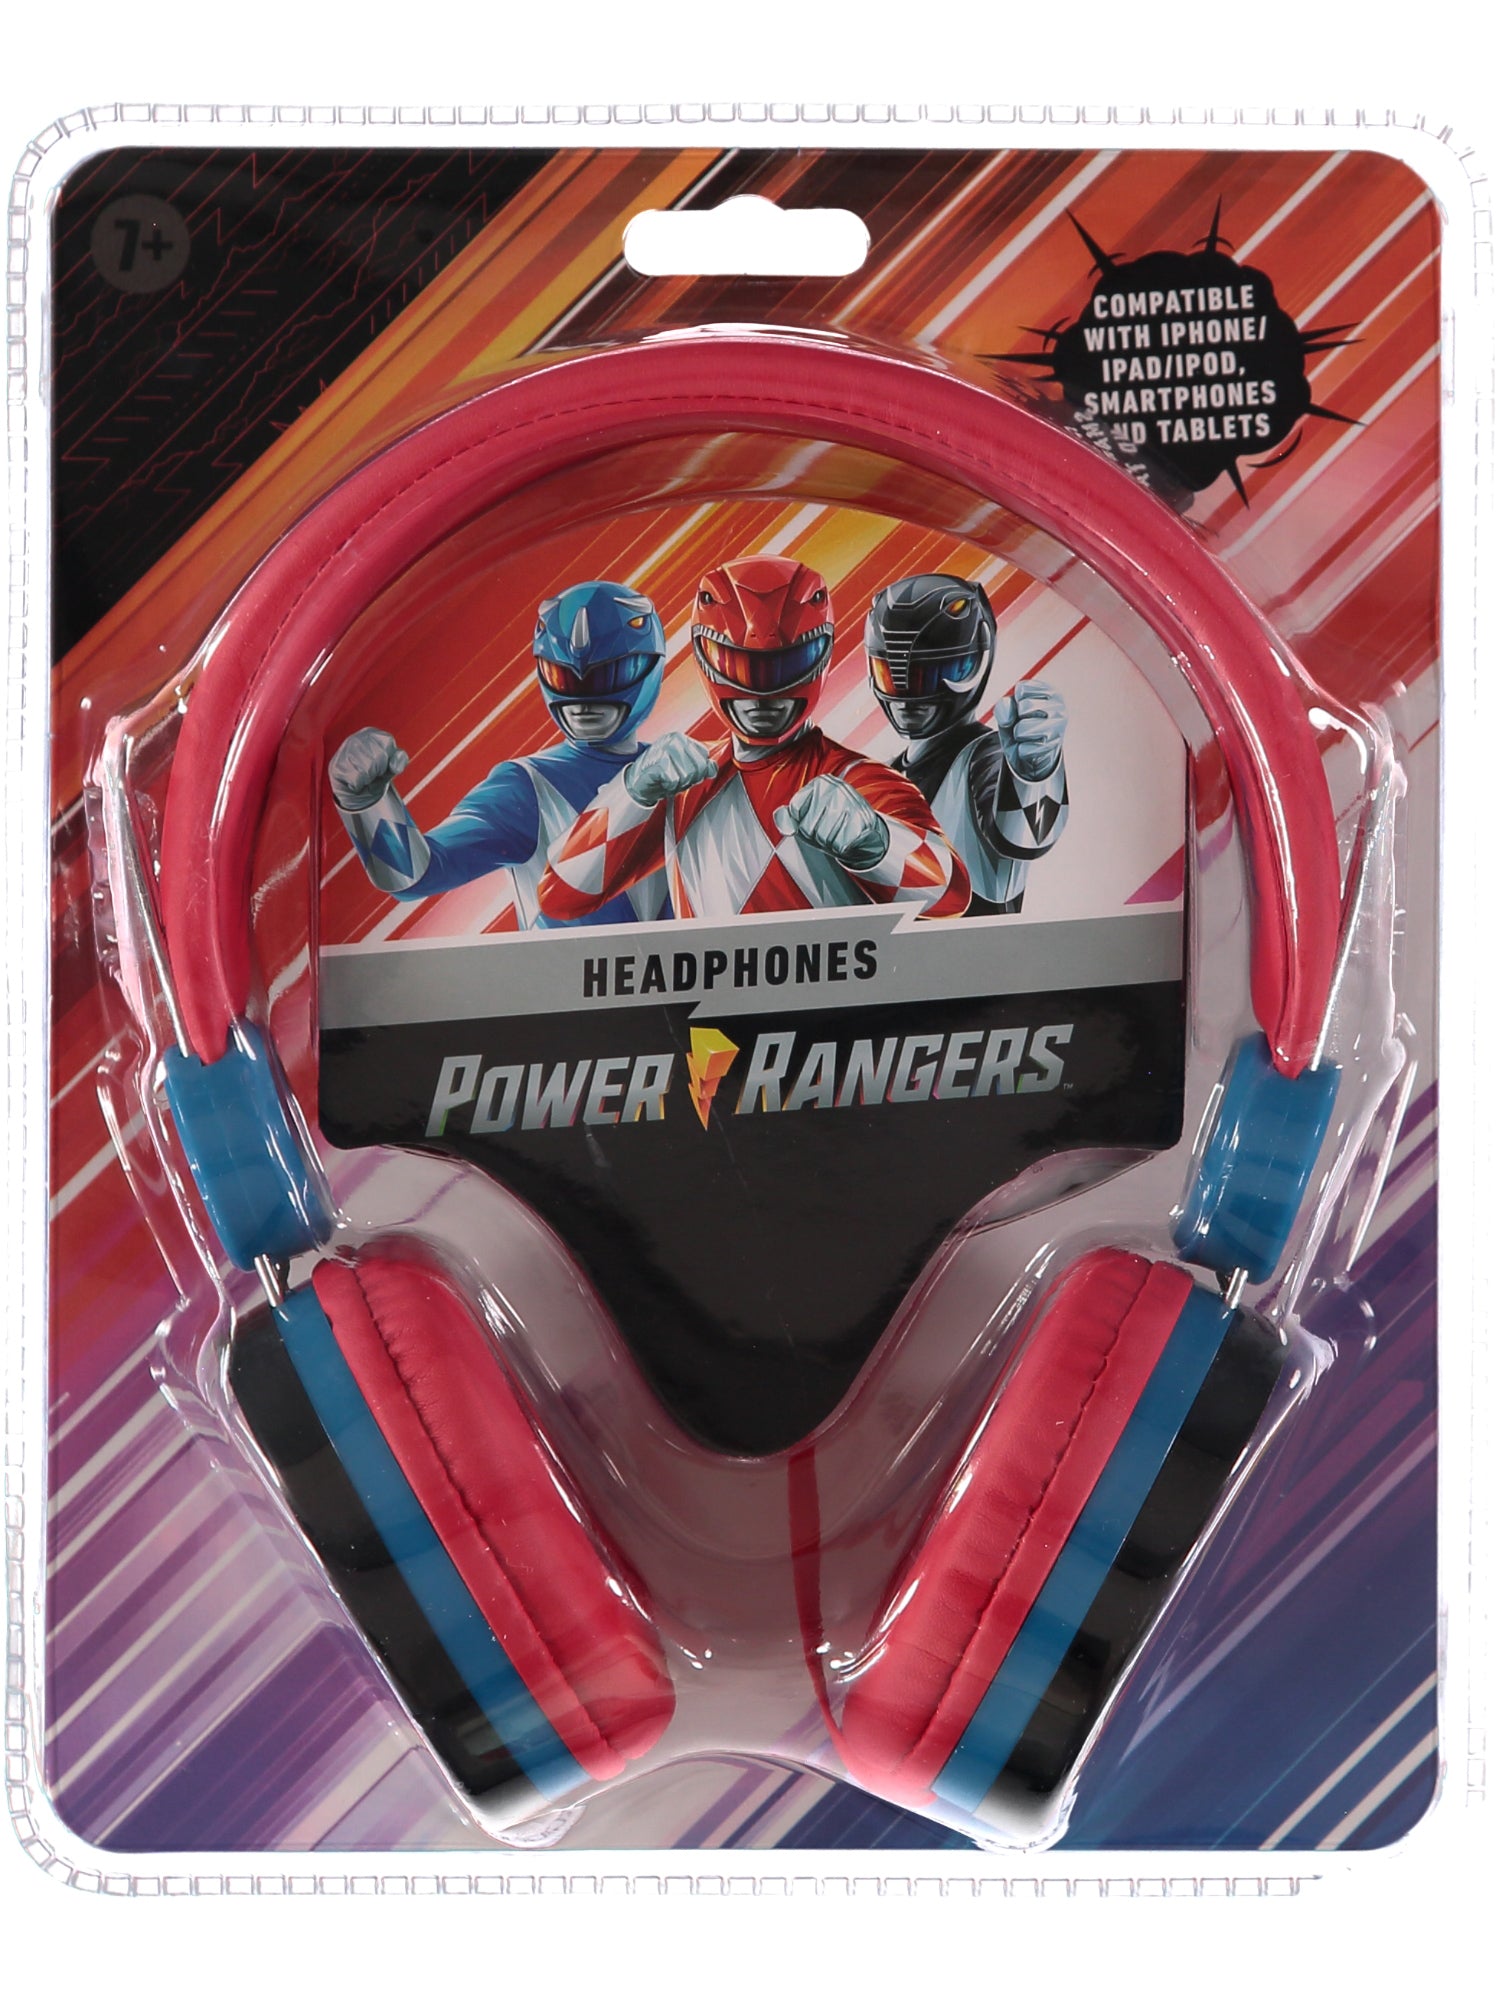 Power Rangers Over The Ear Headphones